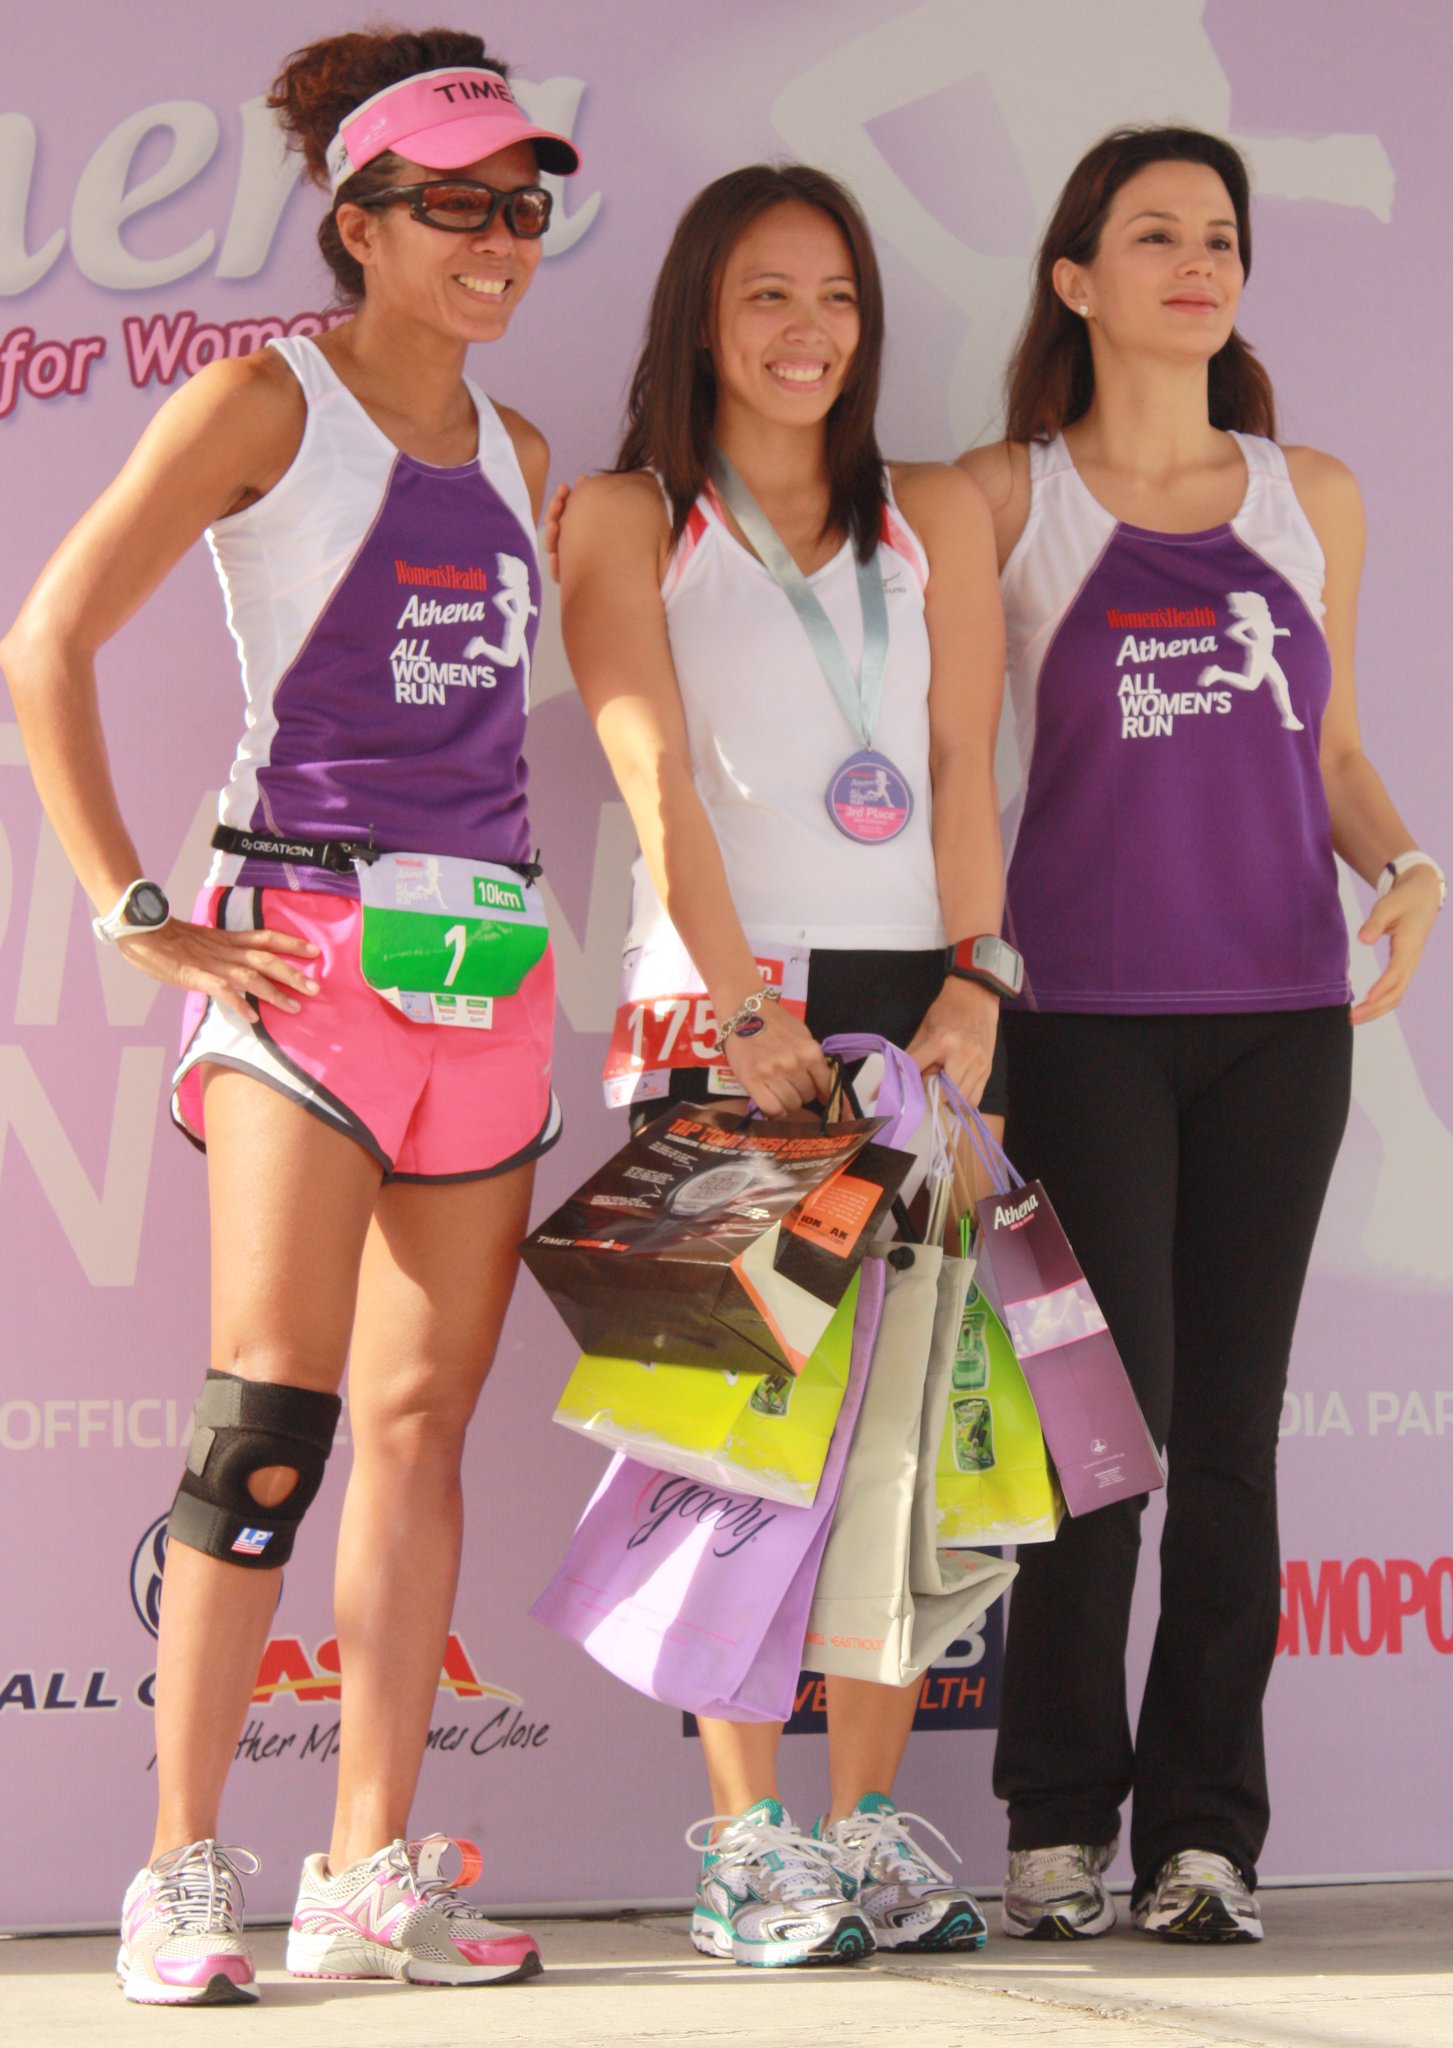 Athena All-Women's Run: With Lara and Bianca